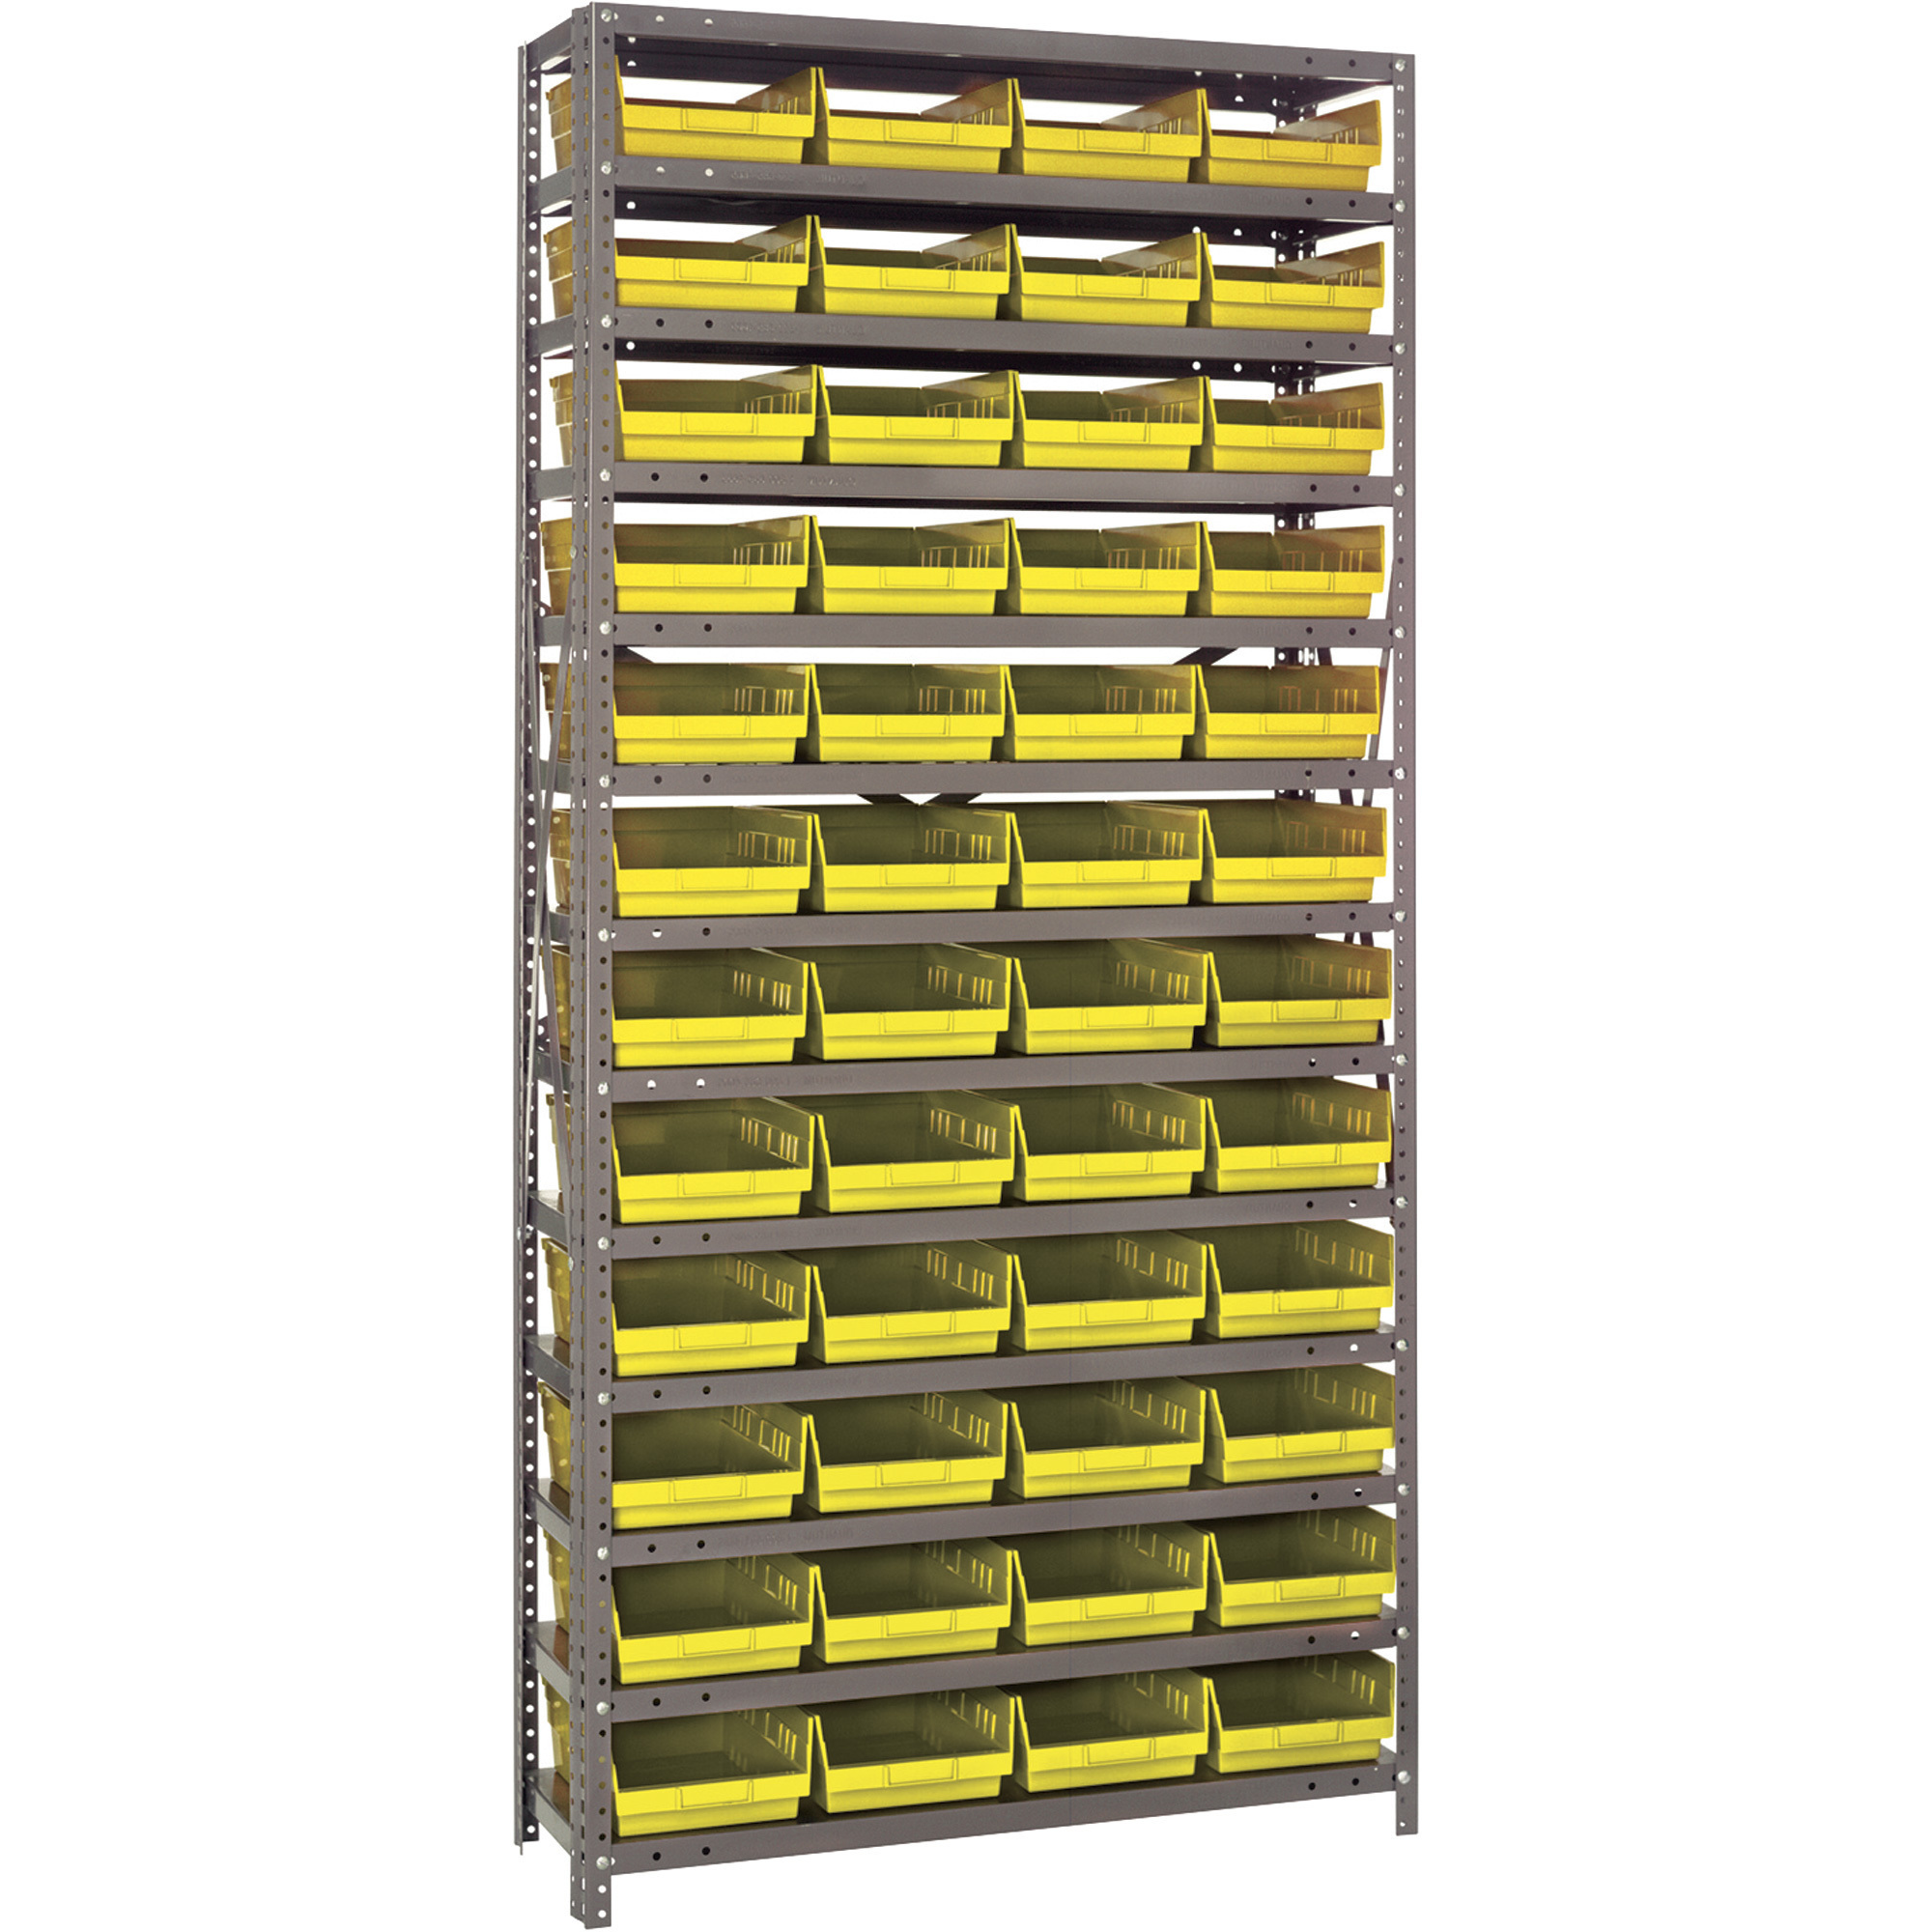 Quantum Storage Single Side Metal Shelving Unit With 48 Bins, 12Inch x 36Inch x 75Inch Rack Size, Yellow, Model 1275-107YL